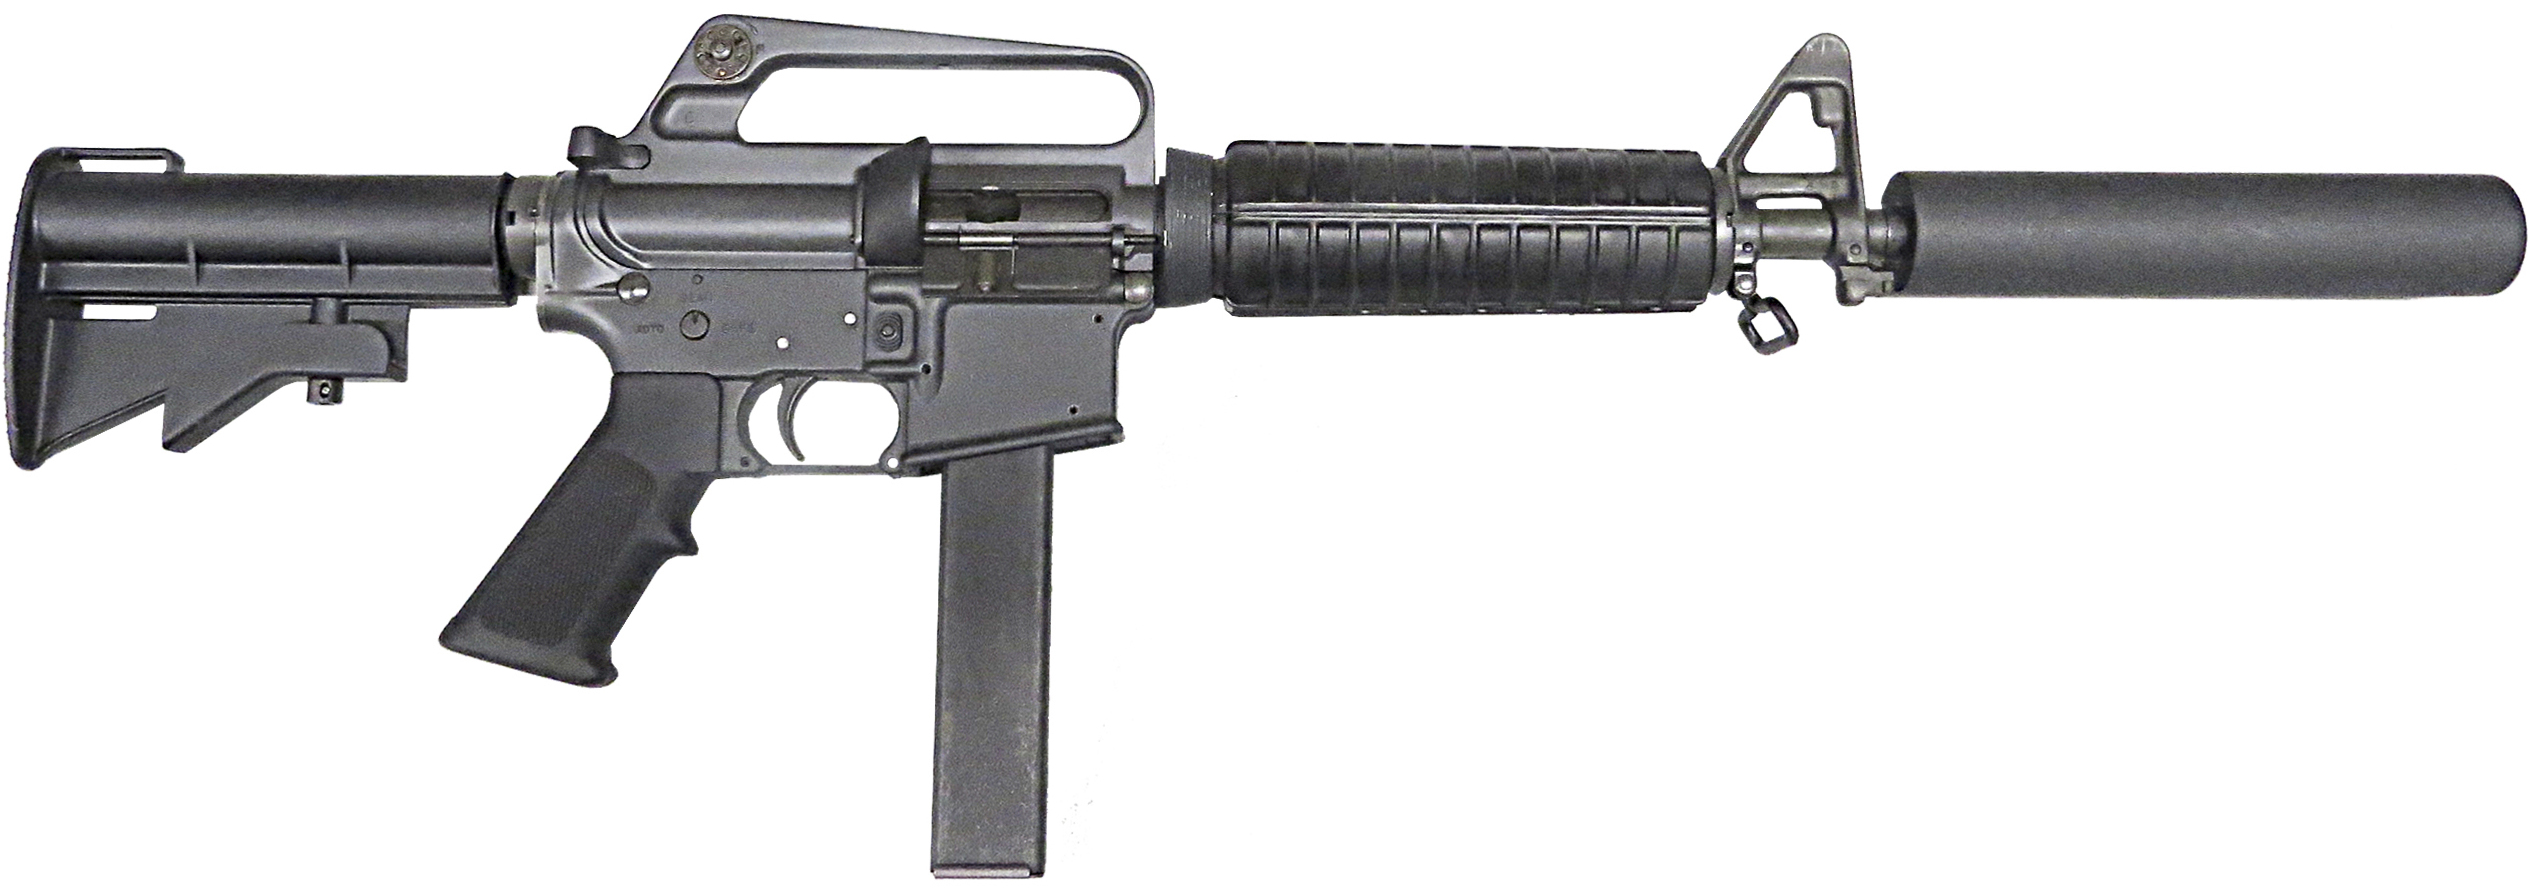 Colt 9mm SMG suppressed.jpg.